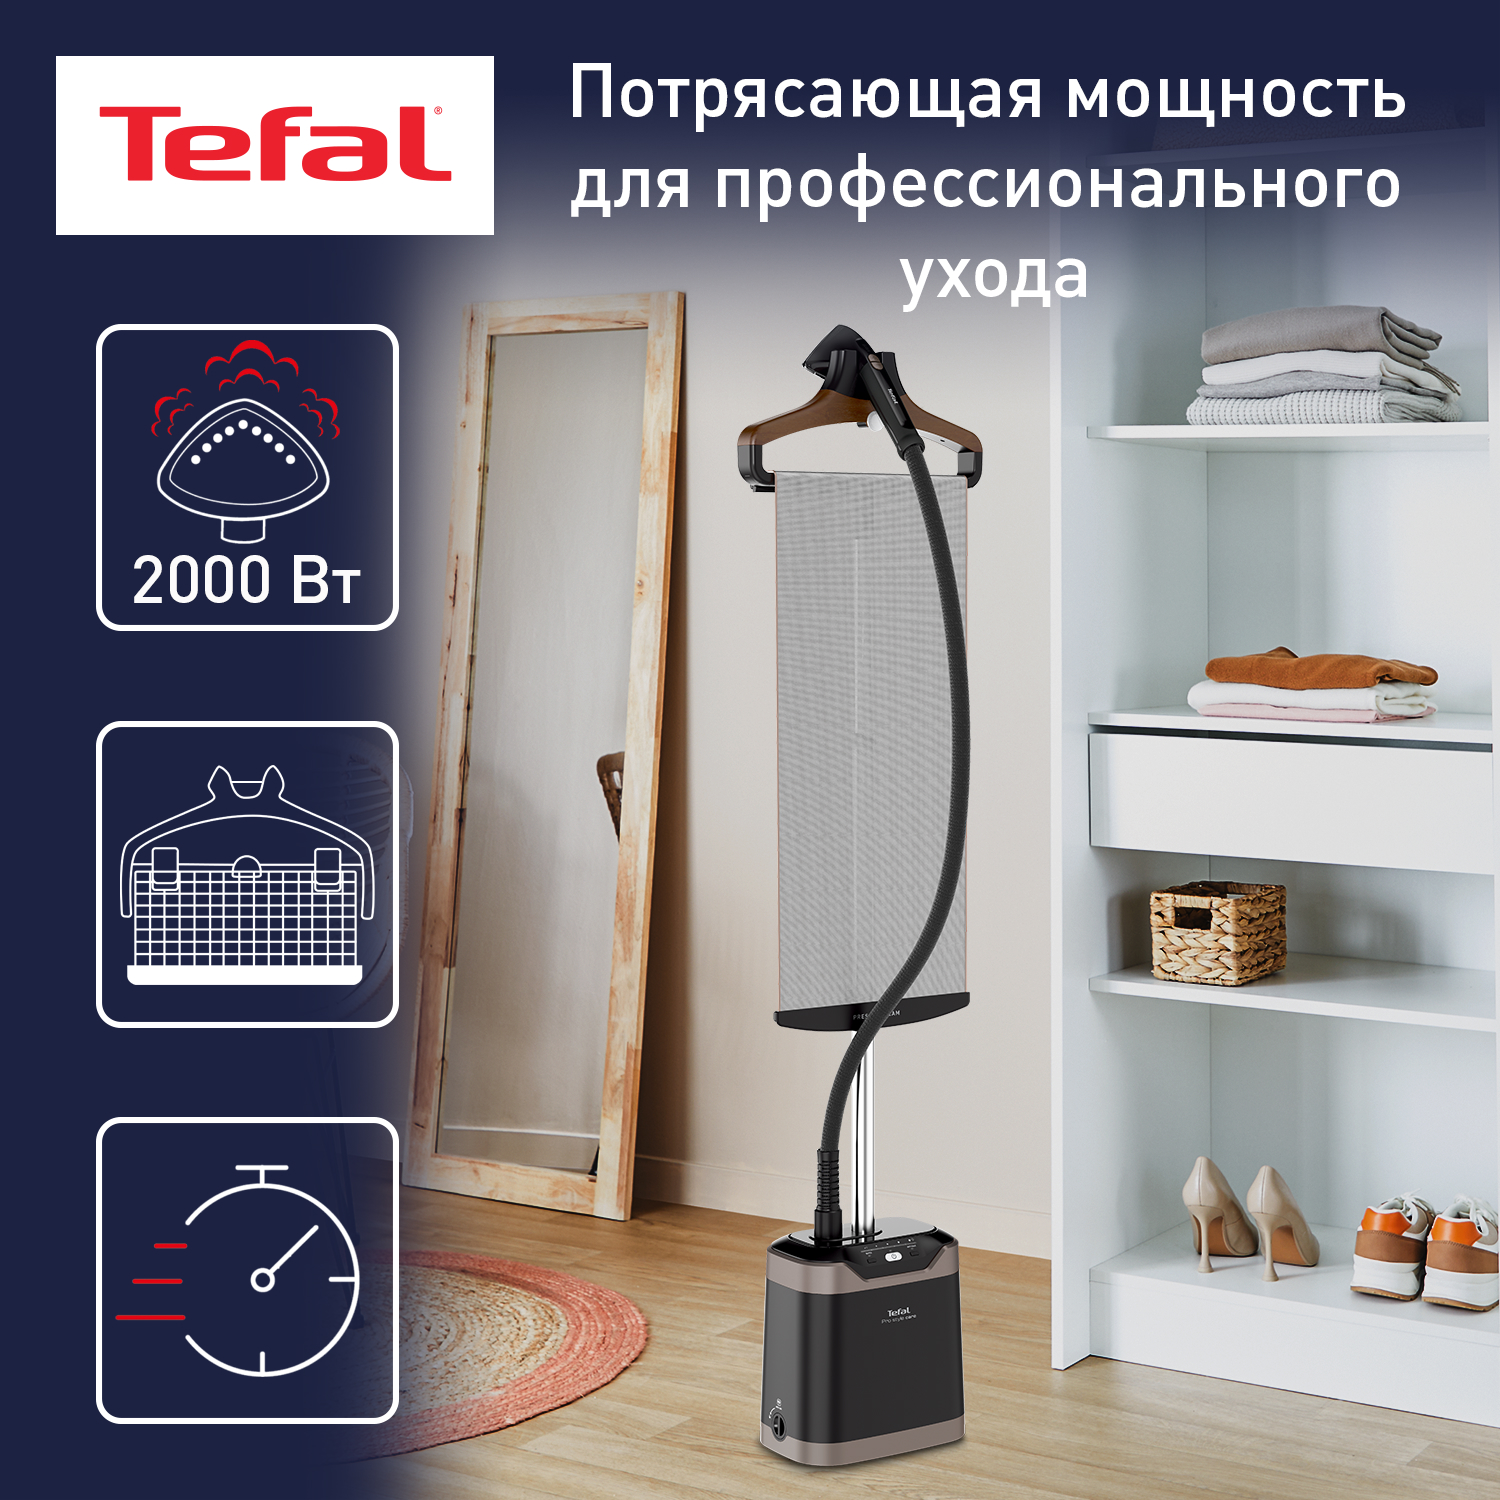 Вертикальный отпариватель Tefal IT8490E0 отпариватель для одежды tefal acess steam force dt8230e1